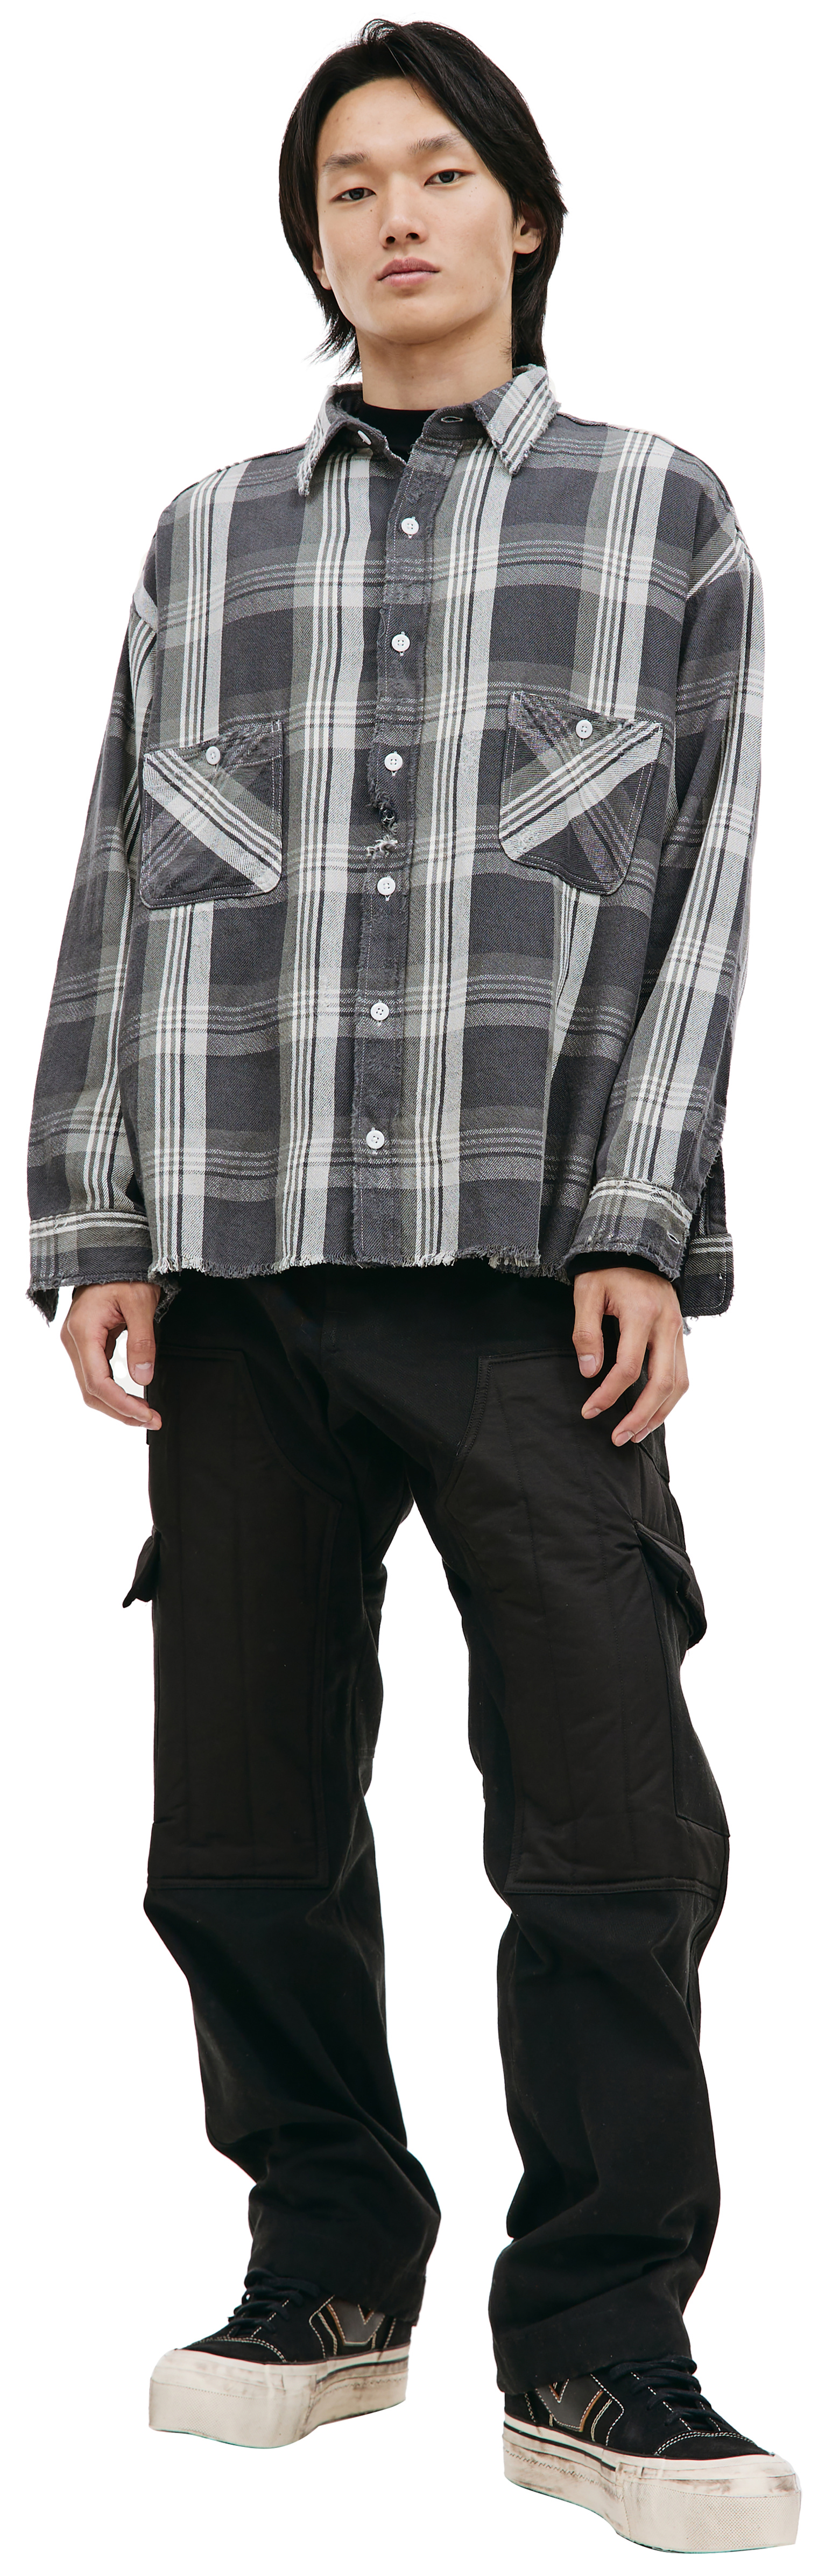 Buy Saint Michael men grey flannel checked shirt for $915 online